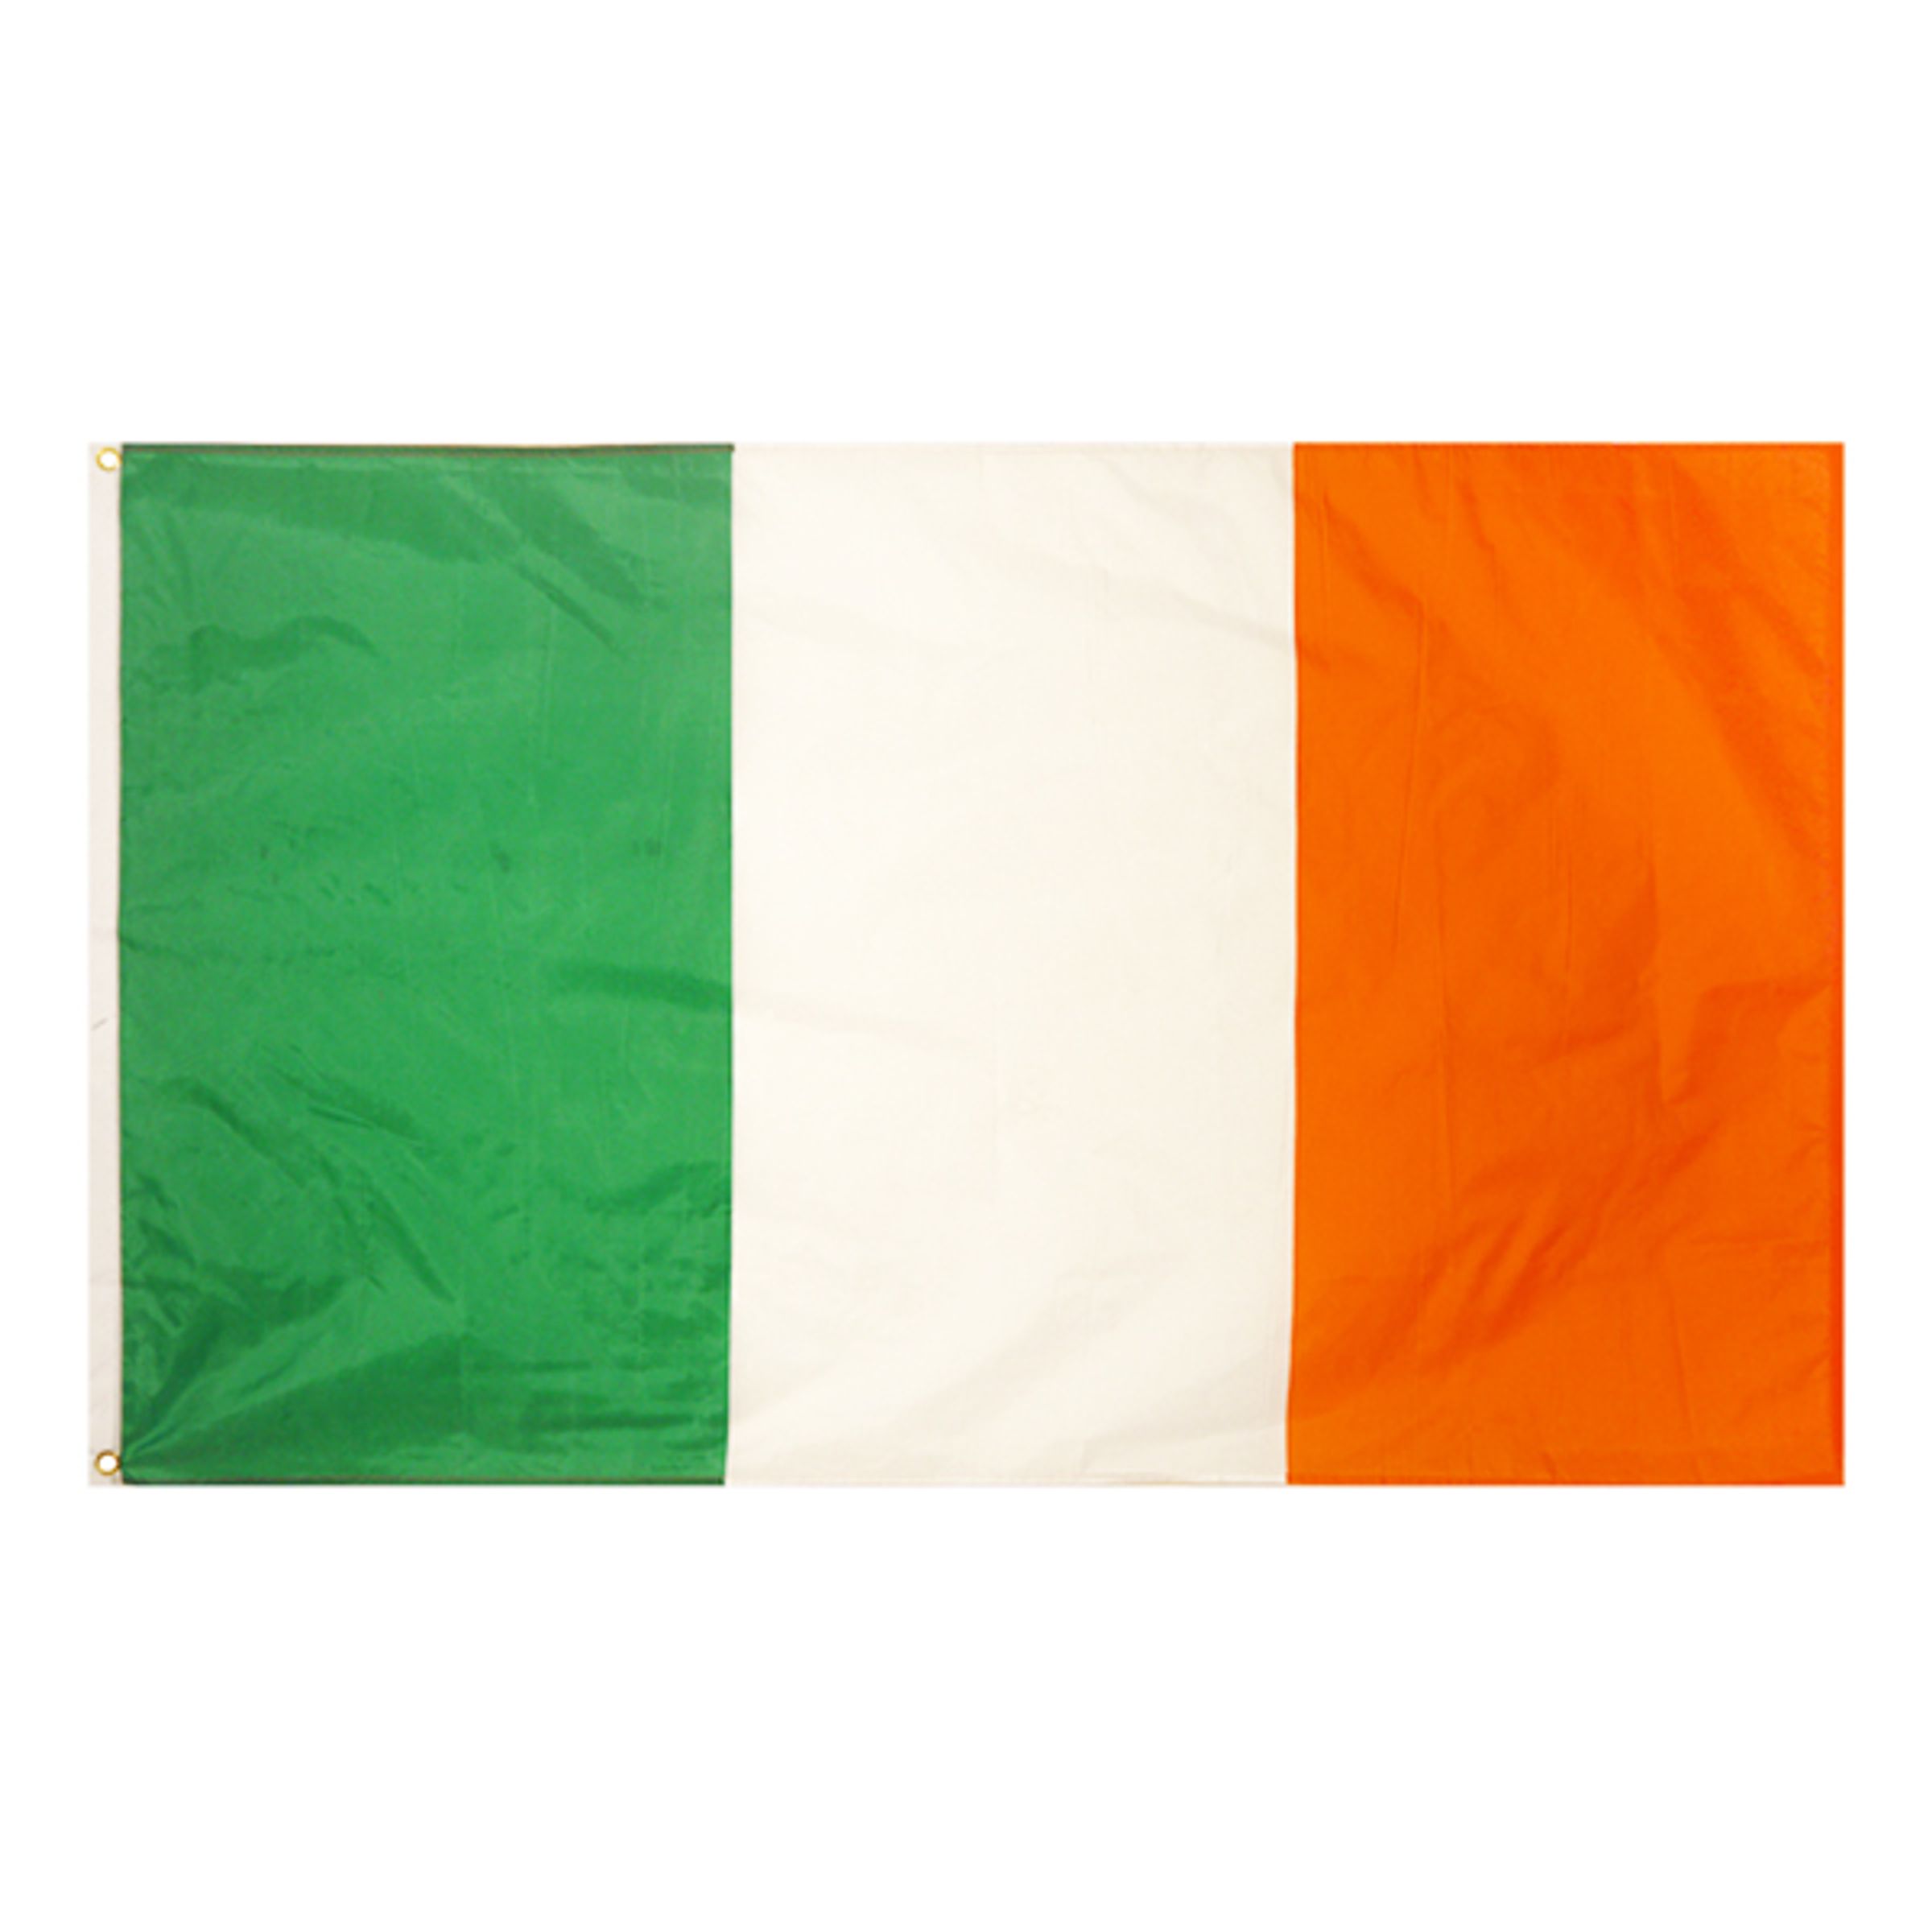 Flagga Irland